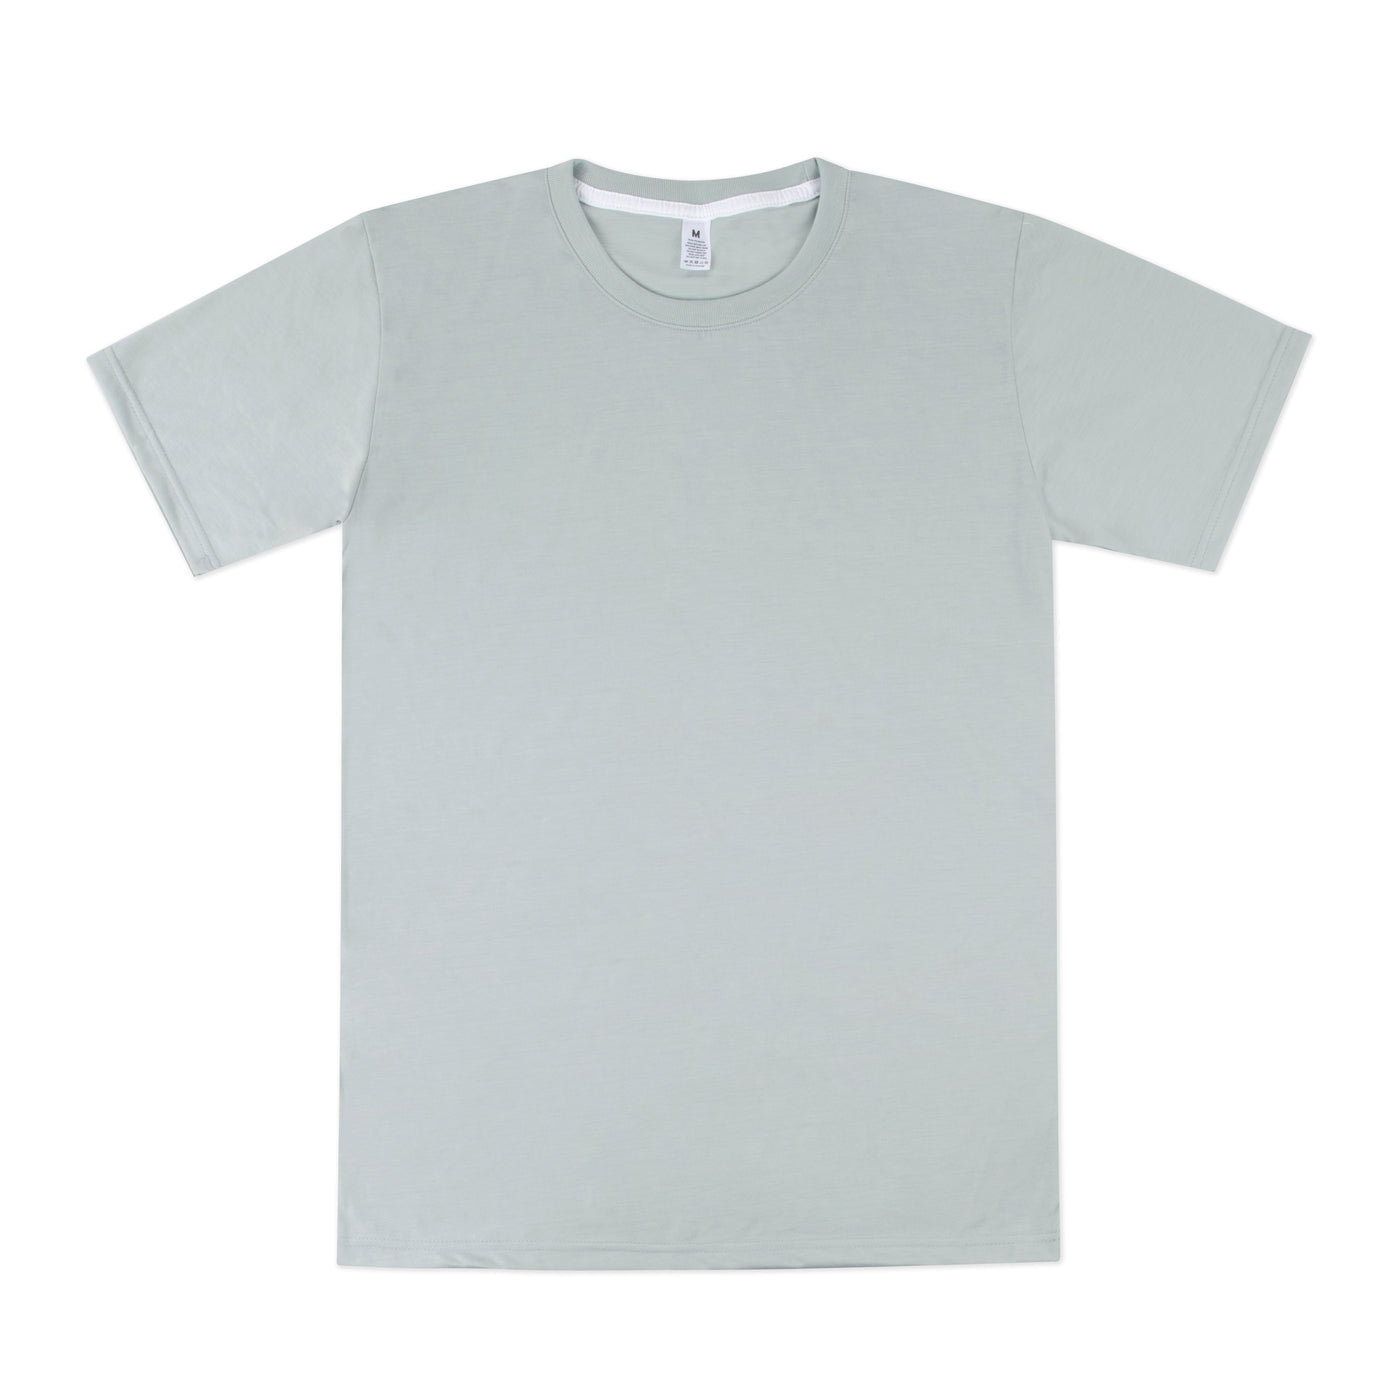 Kids Unisex Sublimation Shirts 6 / Mint